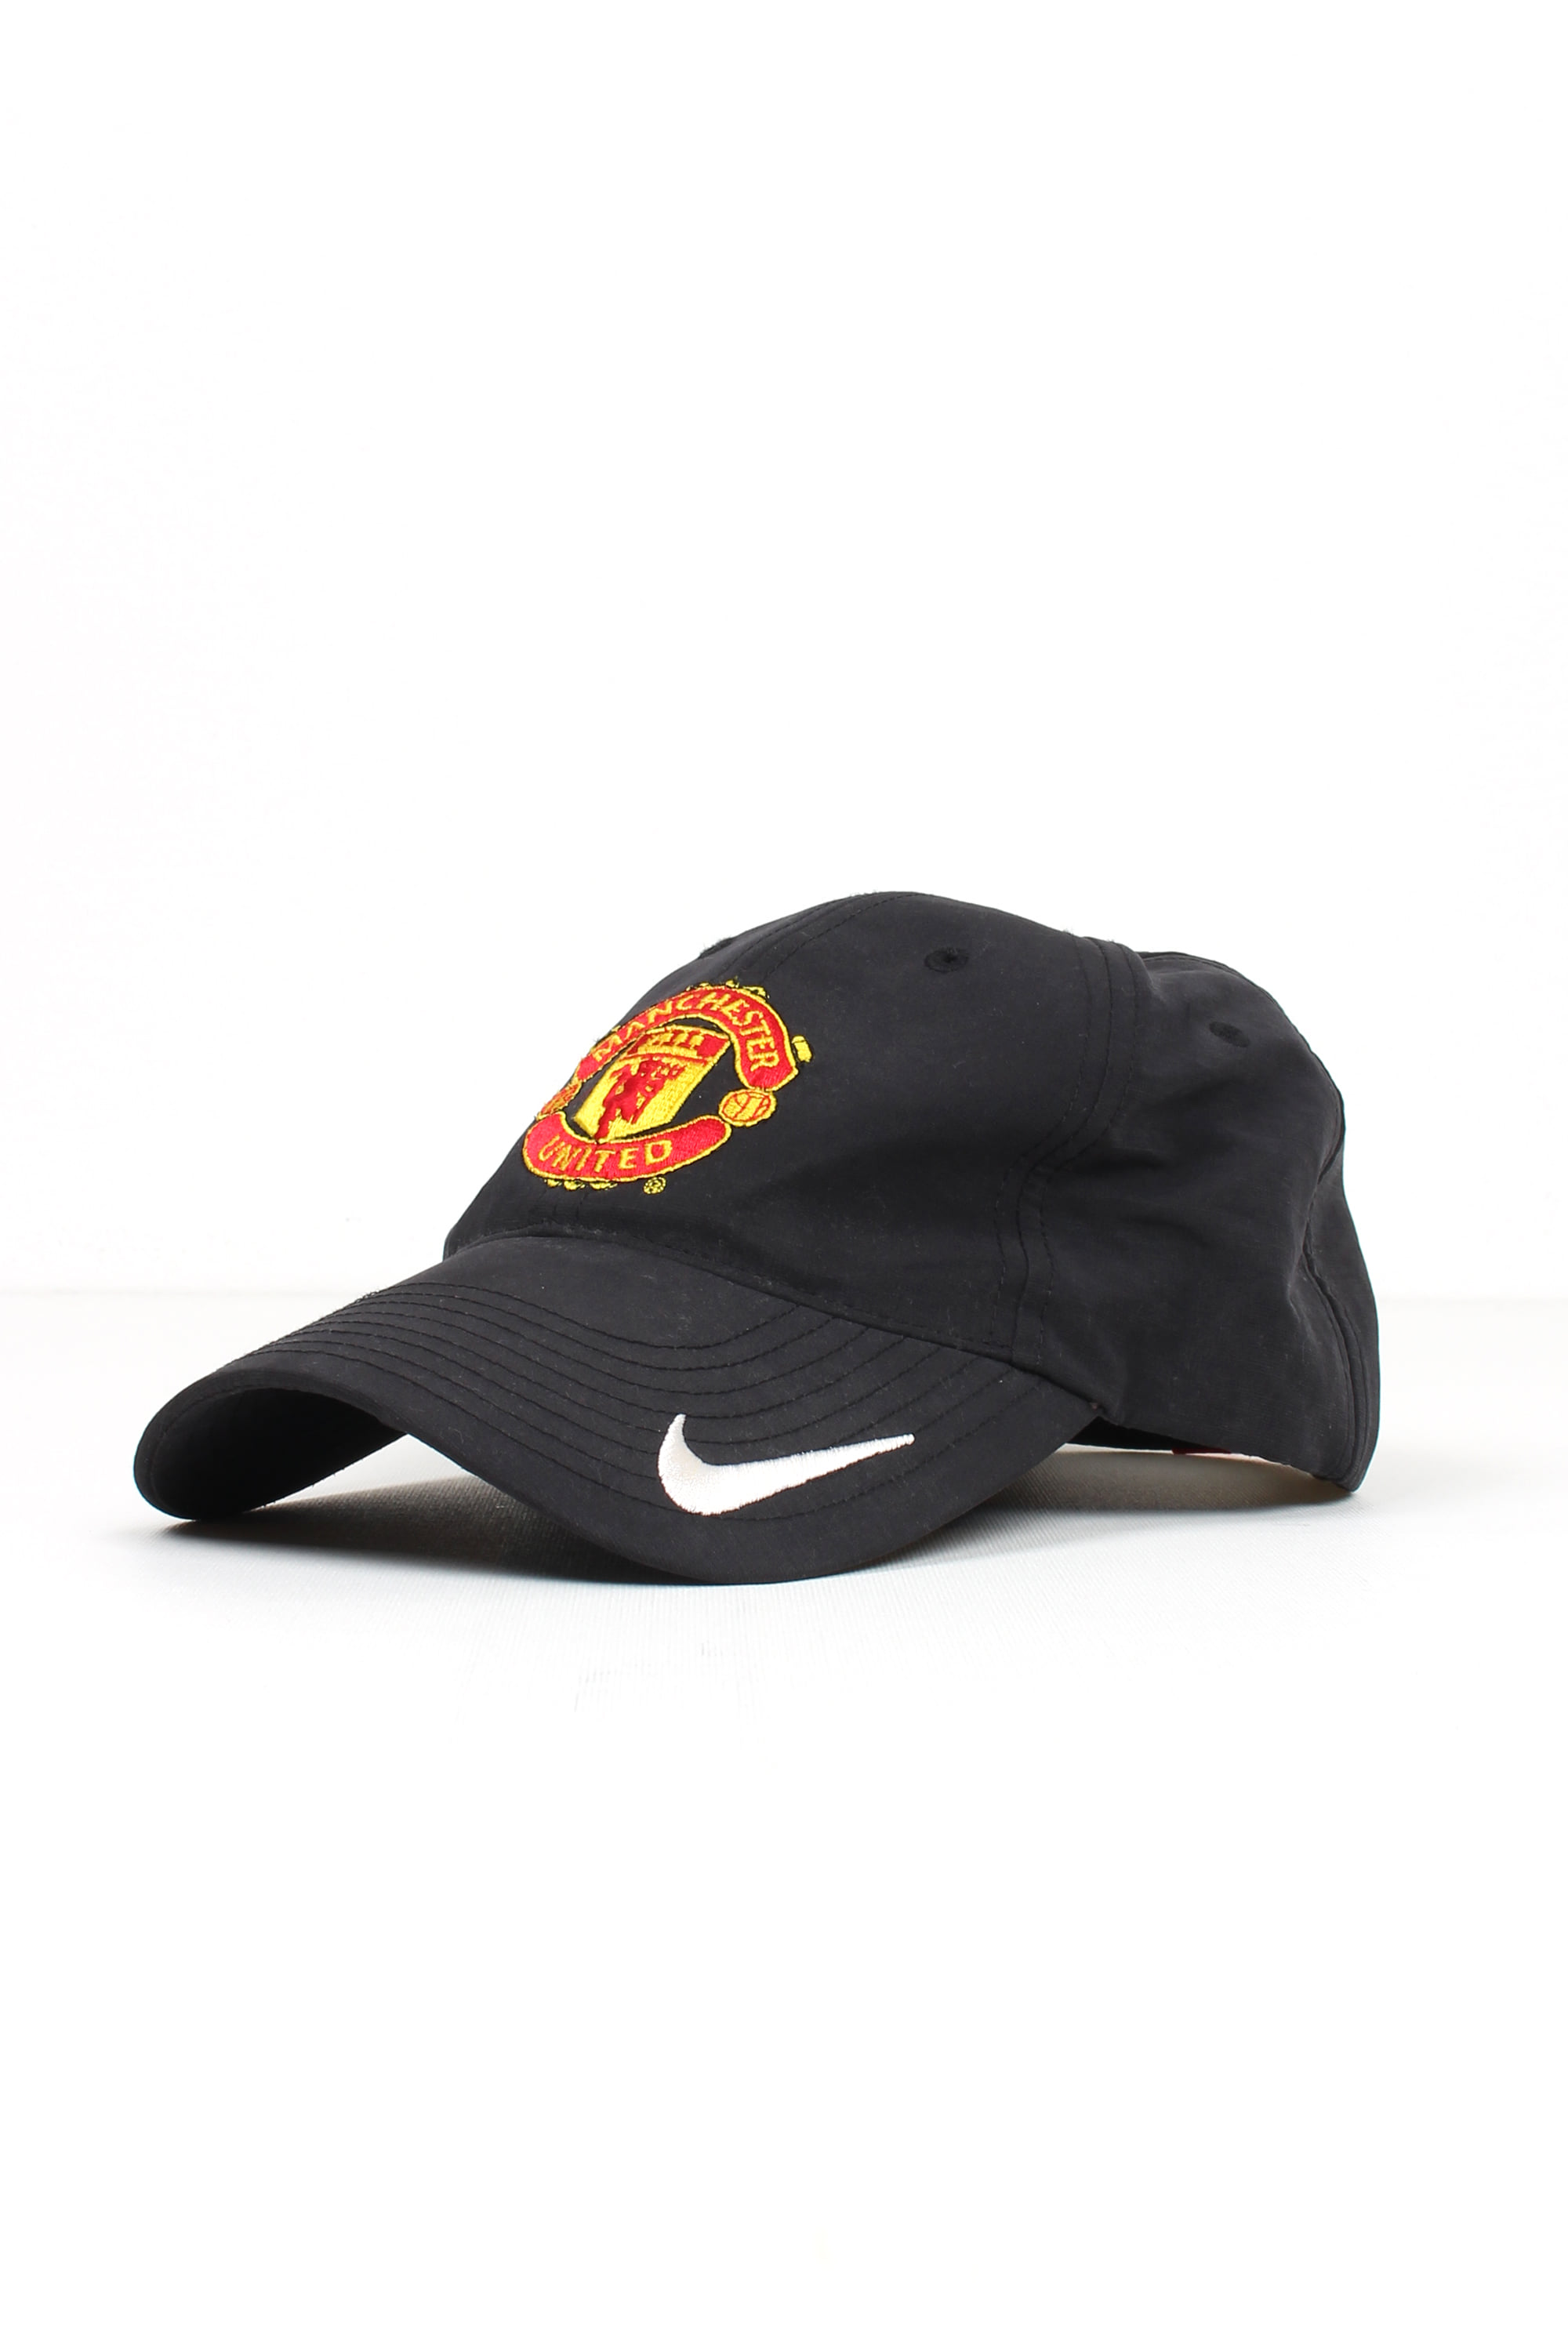 Nike manchester united Cap